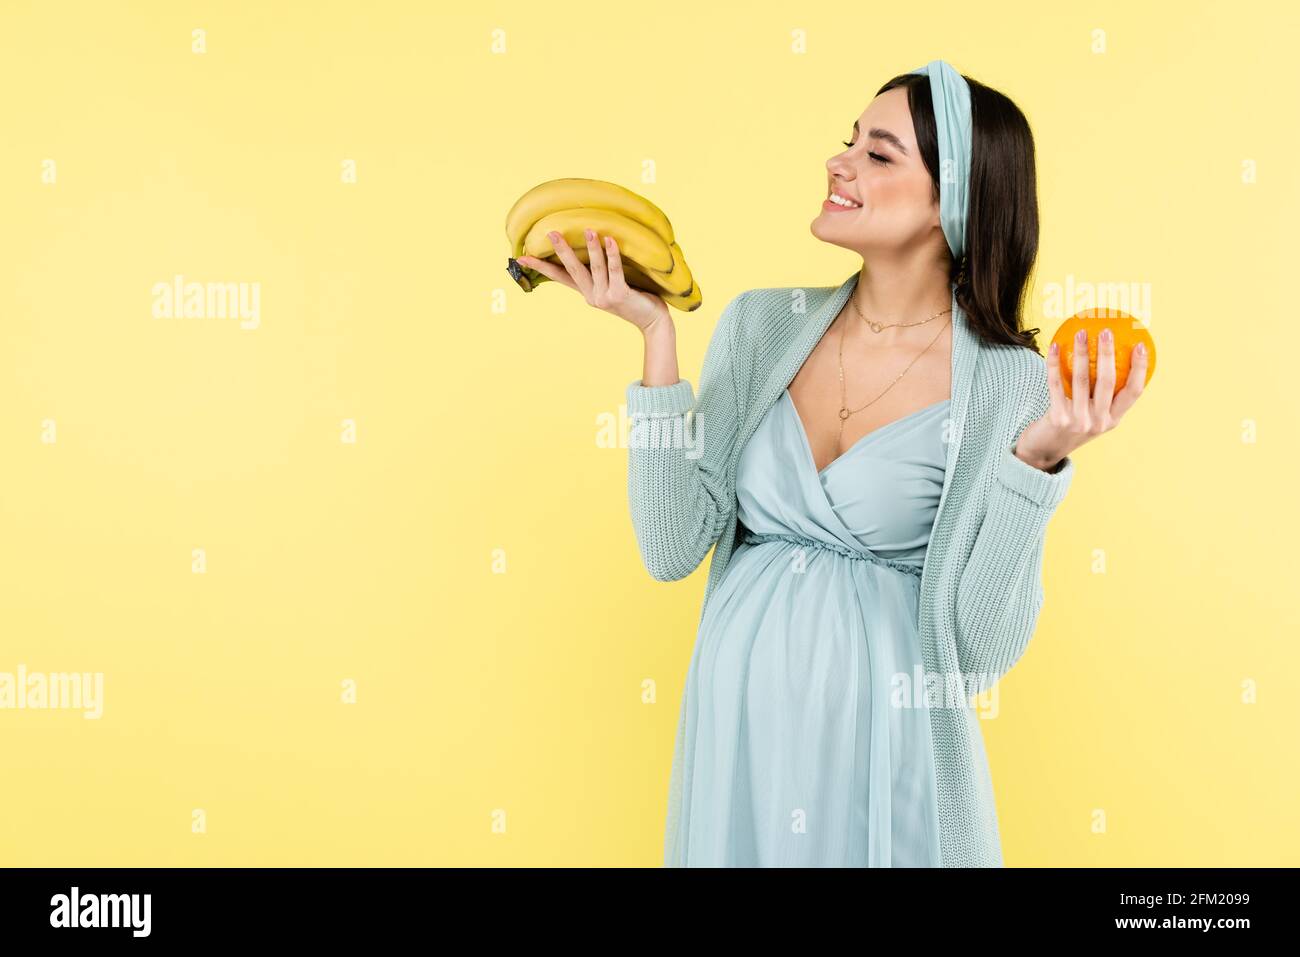 Freudige Schwangere hält reife Bananen isoliert auf gelb Stockfotografie -  Alamy